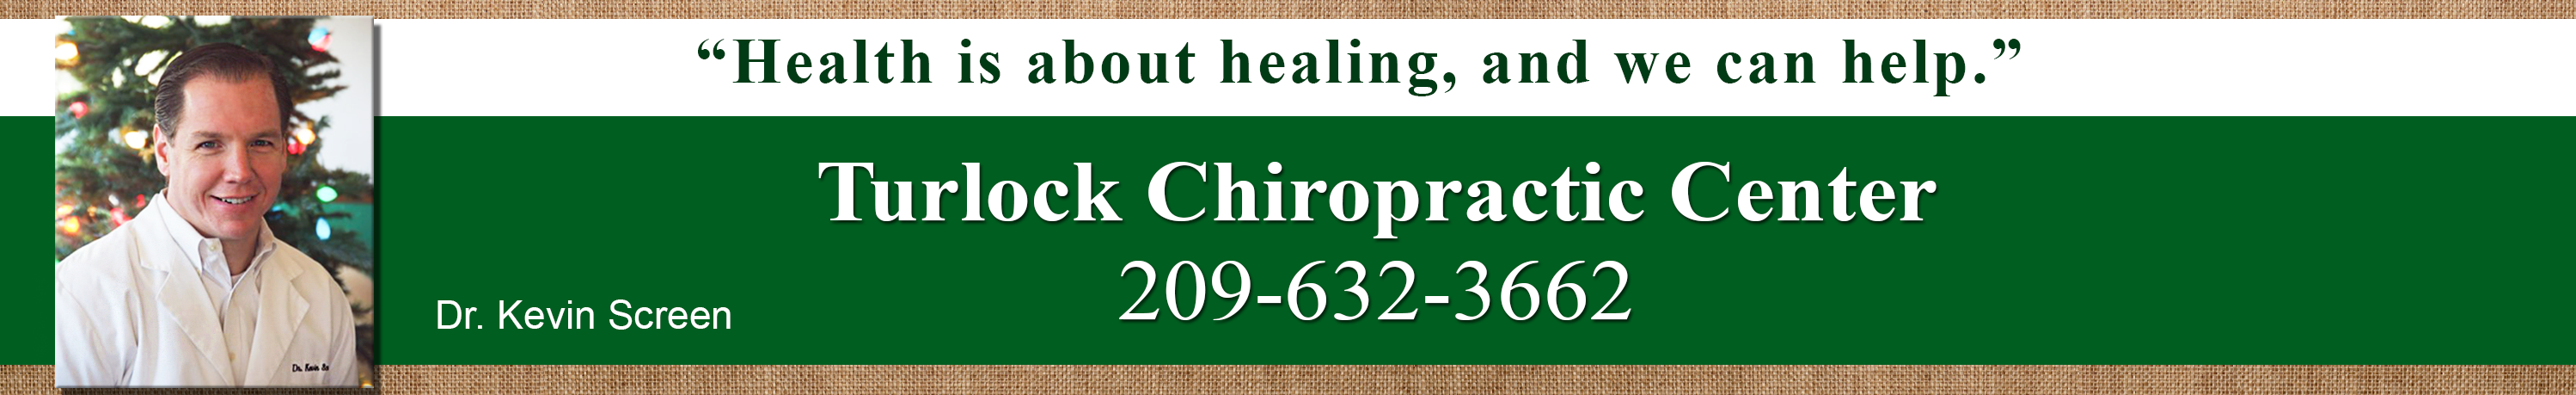 Turlock Chiropractic Center